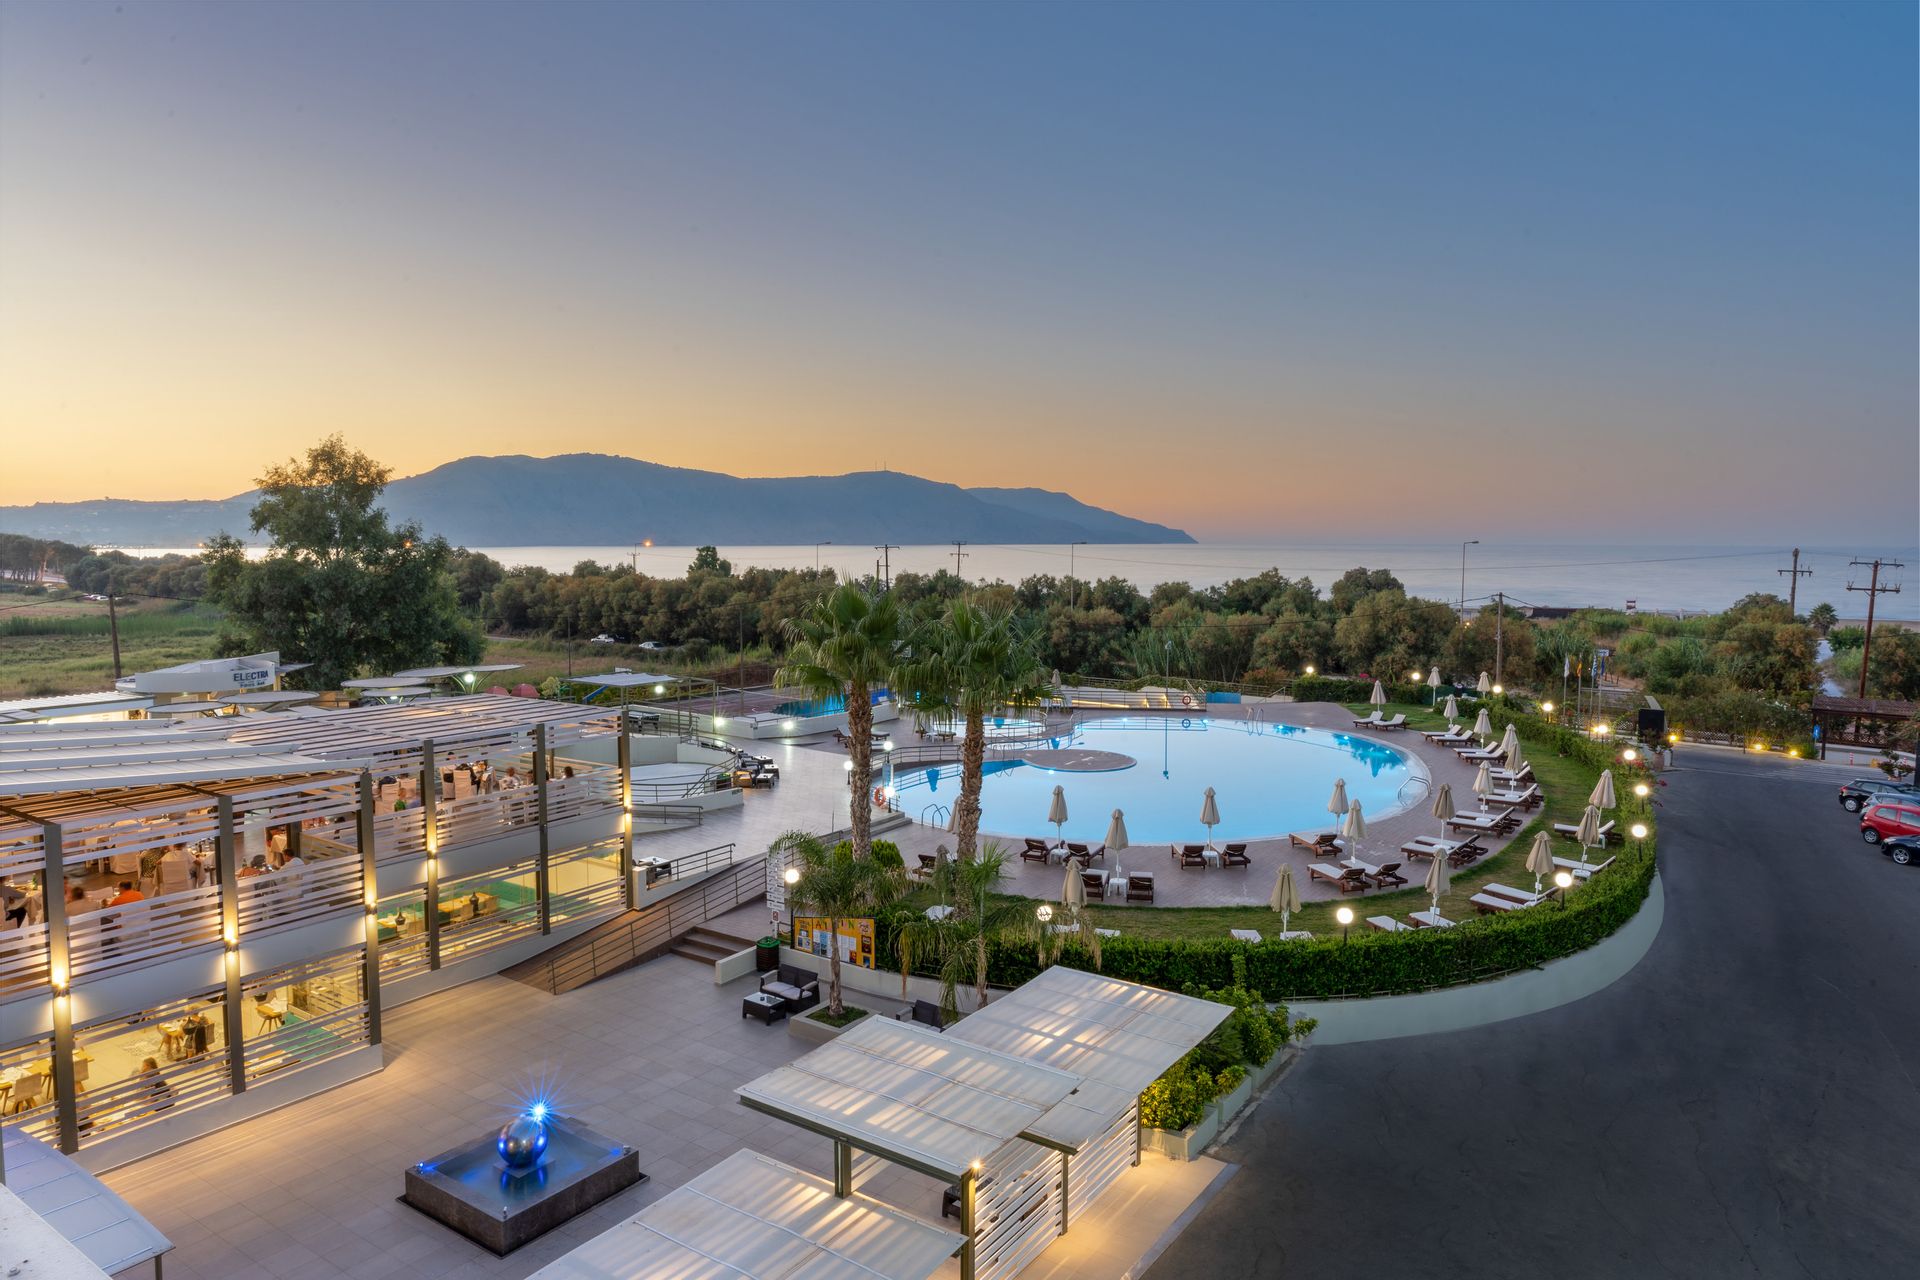 5* Georgioupolis Resort & Aqua Park - Χανιά, Κρήτη ✦ 2 Ημέρες (1 Διανυκτέρευση) ✦ 2 άτομα + 1 παιδί έως 15 ετών ✦ 8 ✦ 01/05/2022 έως 30/09/2022 ✦ Δίπλα στη θάλασσα!